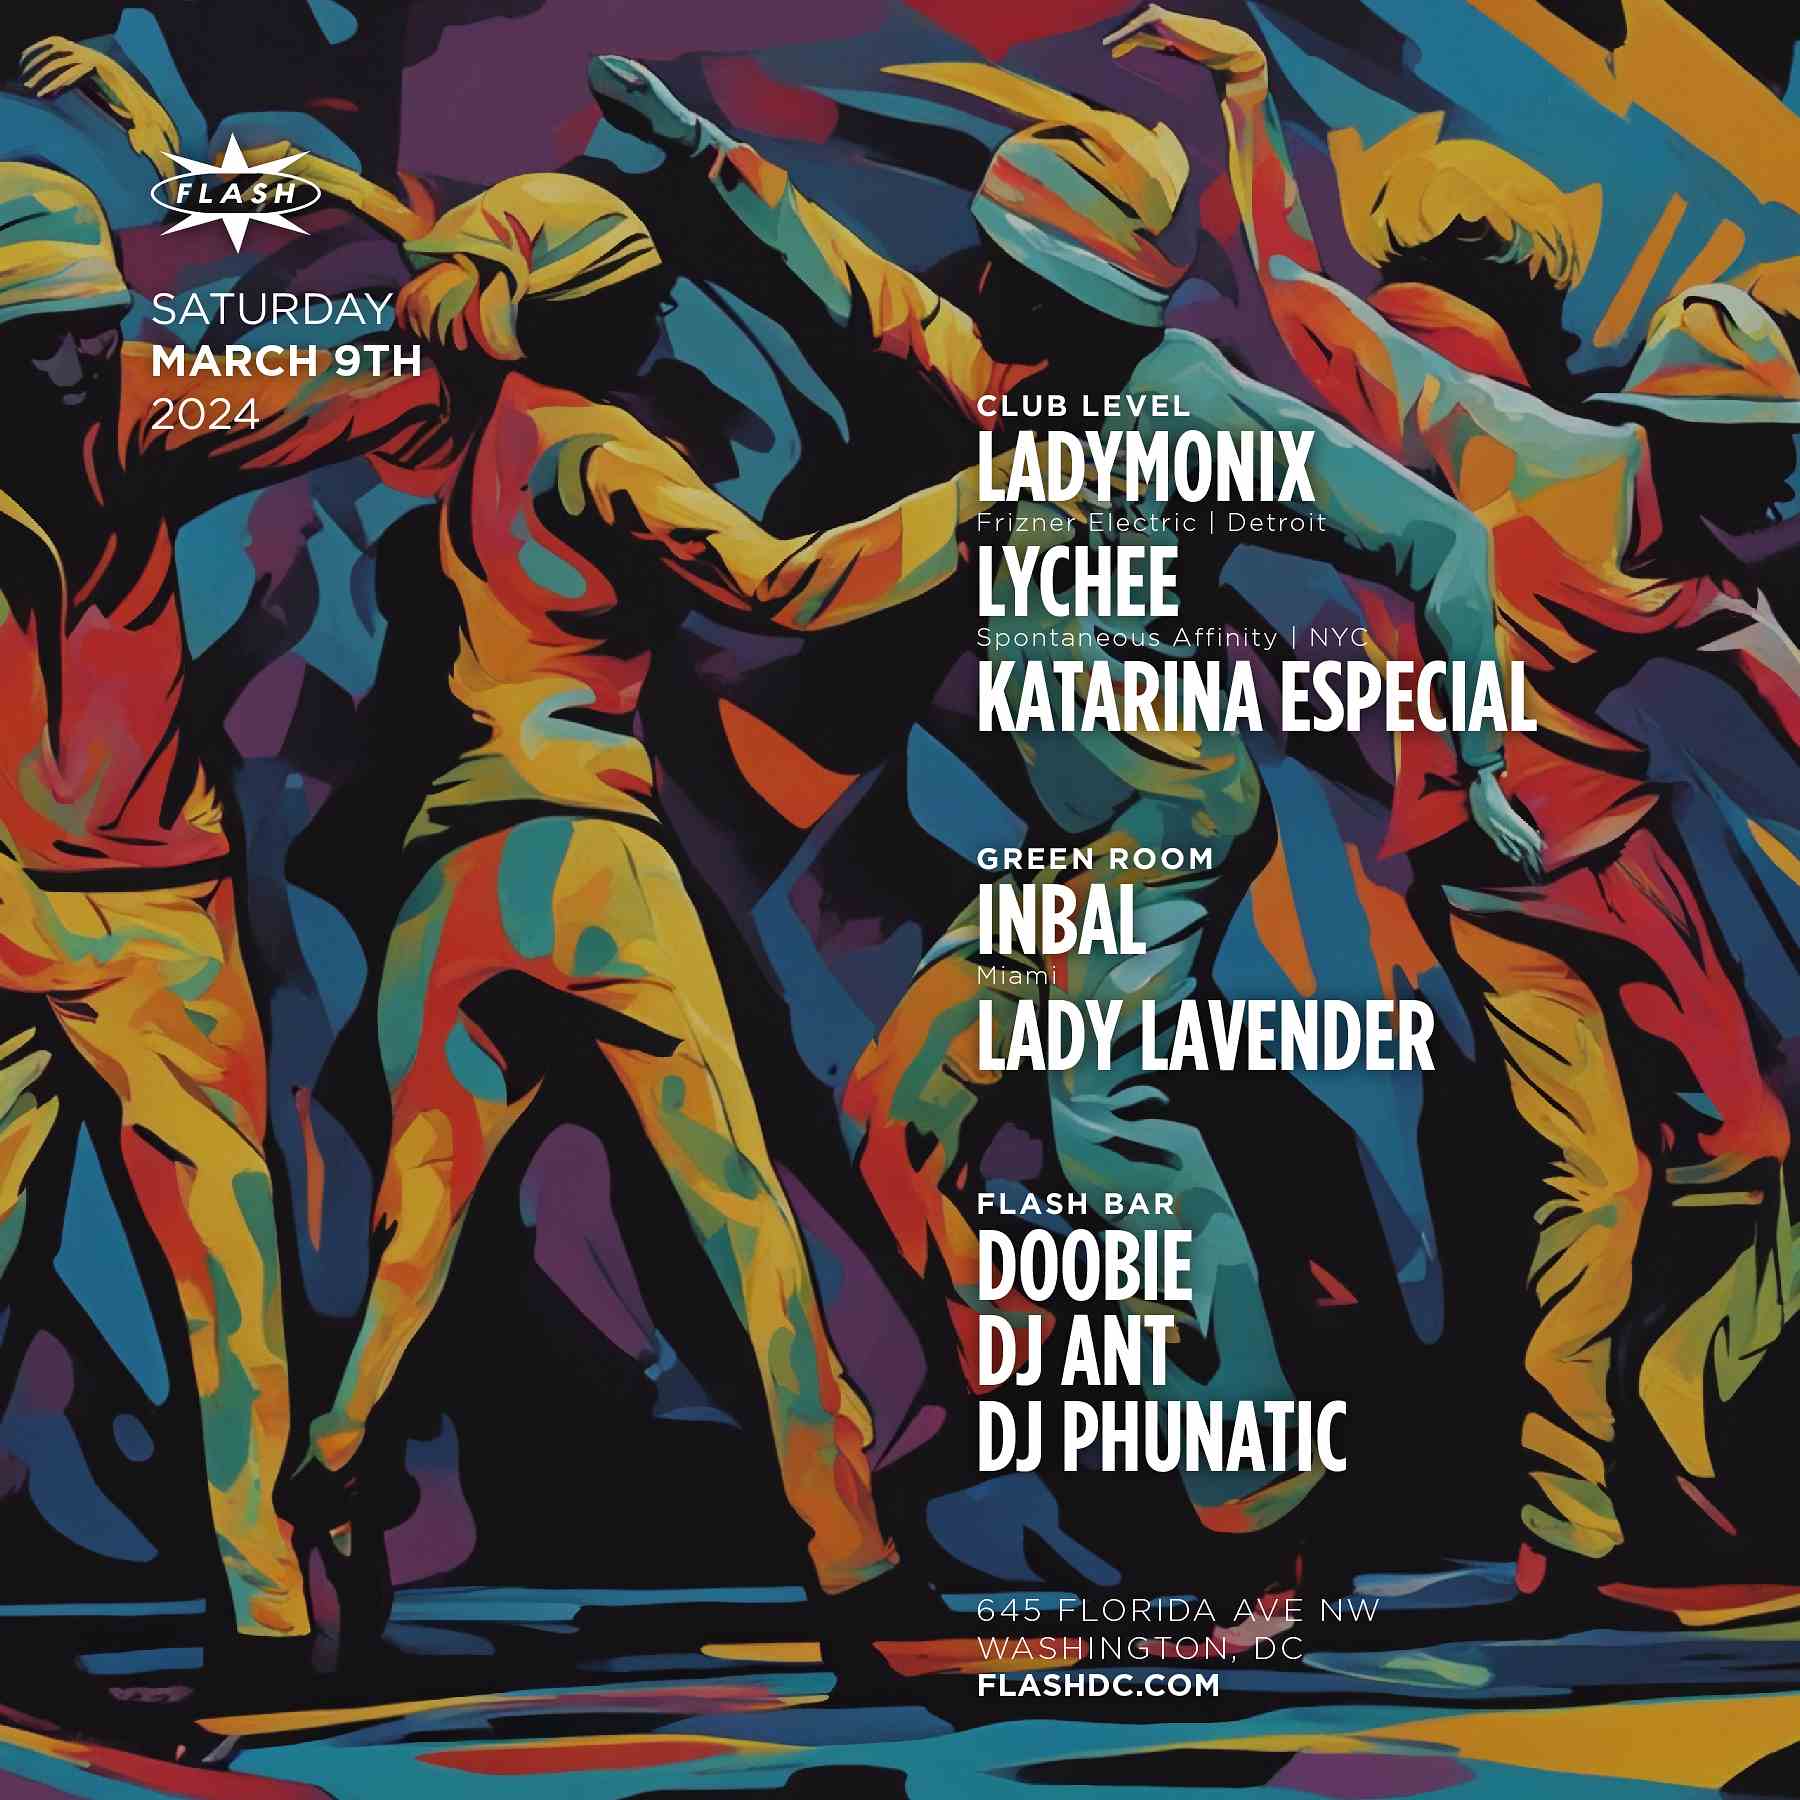 Ladymonix - Lychee event flyer